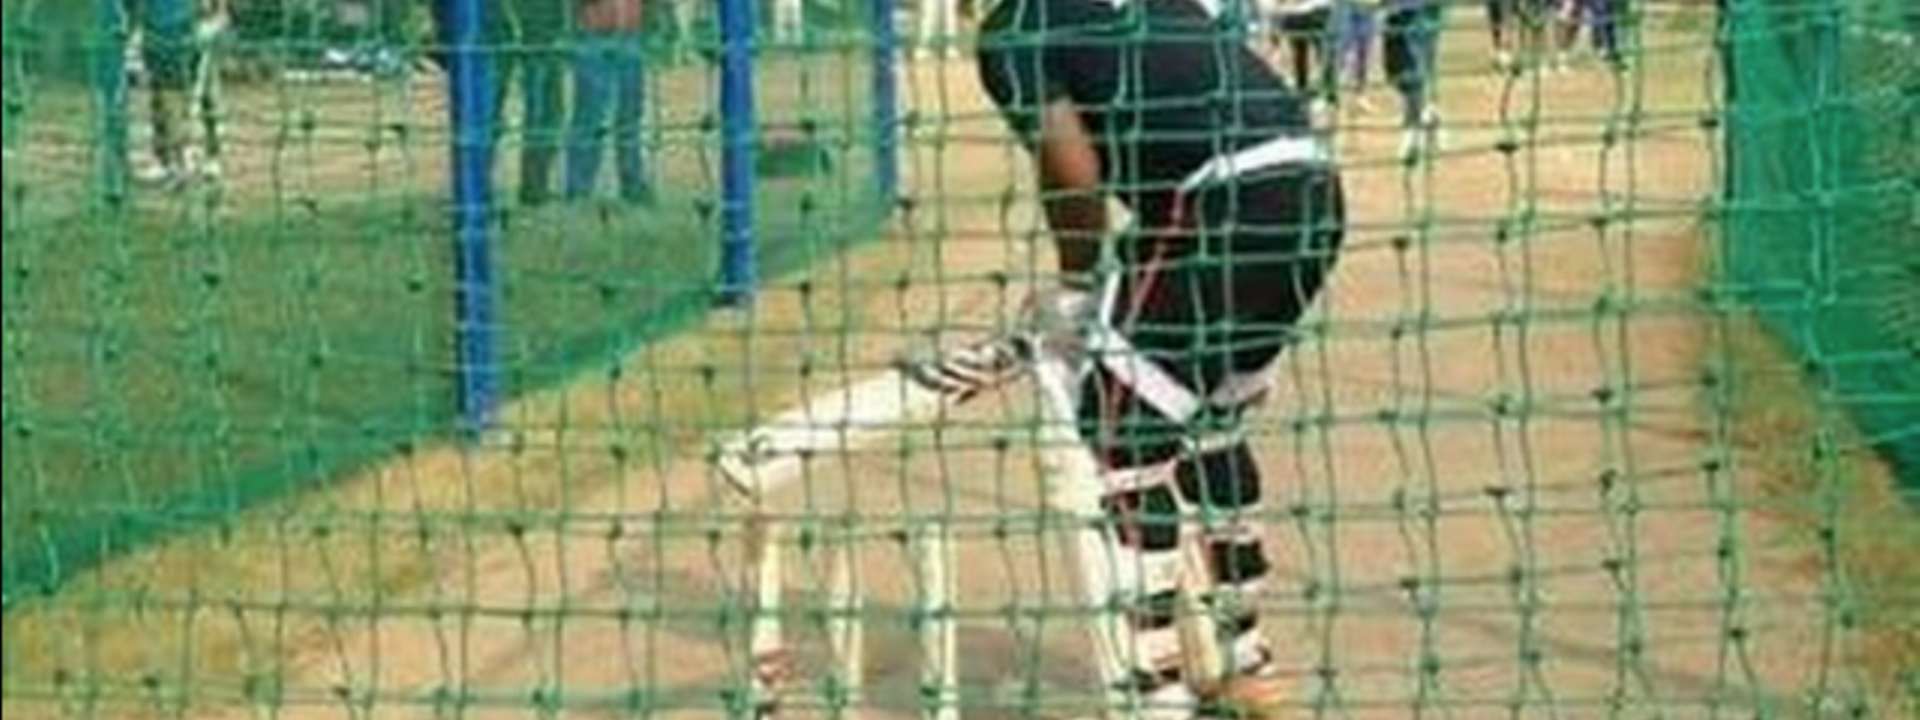 cricket academy in delhi - Sonnet Cricket Club